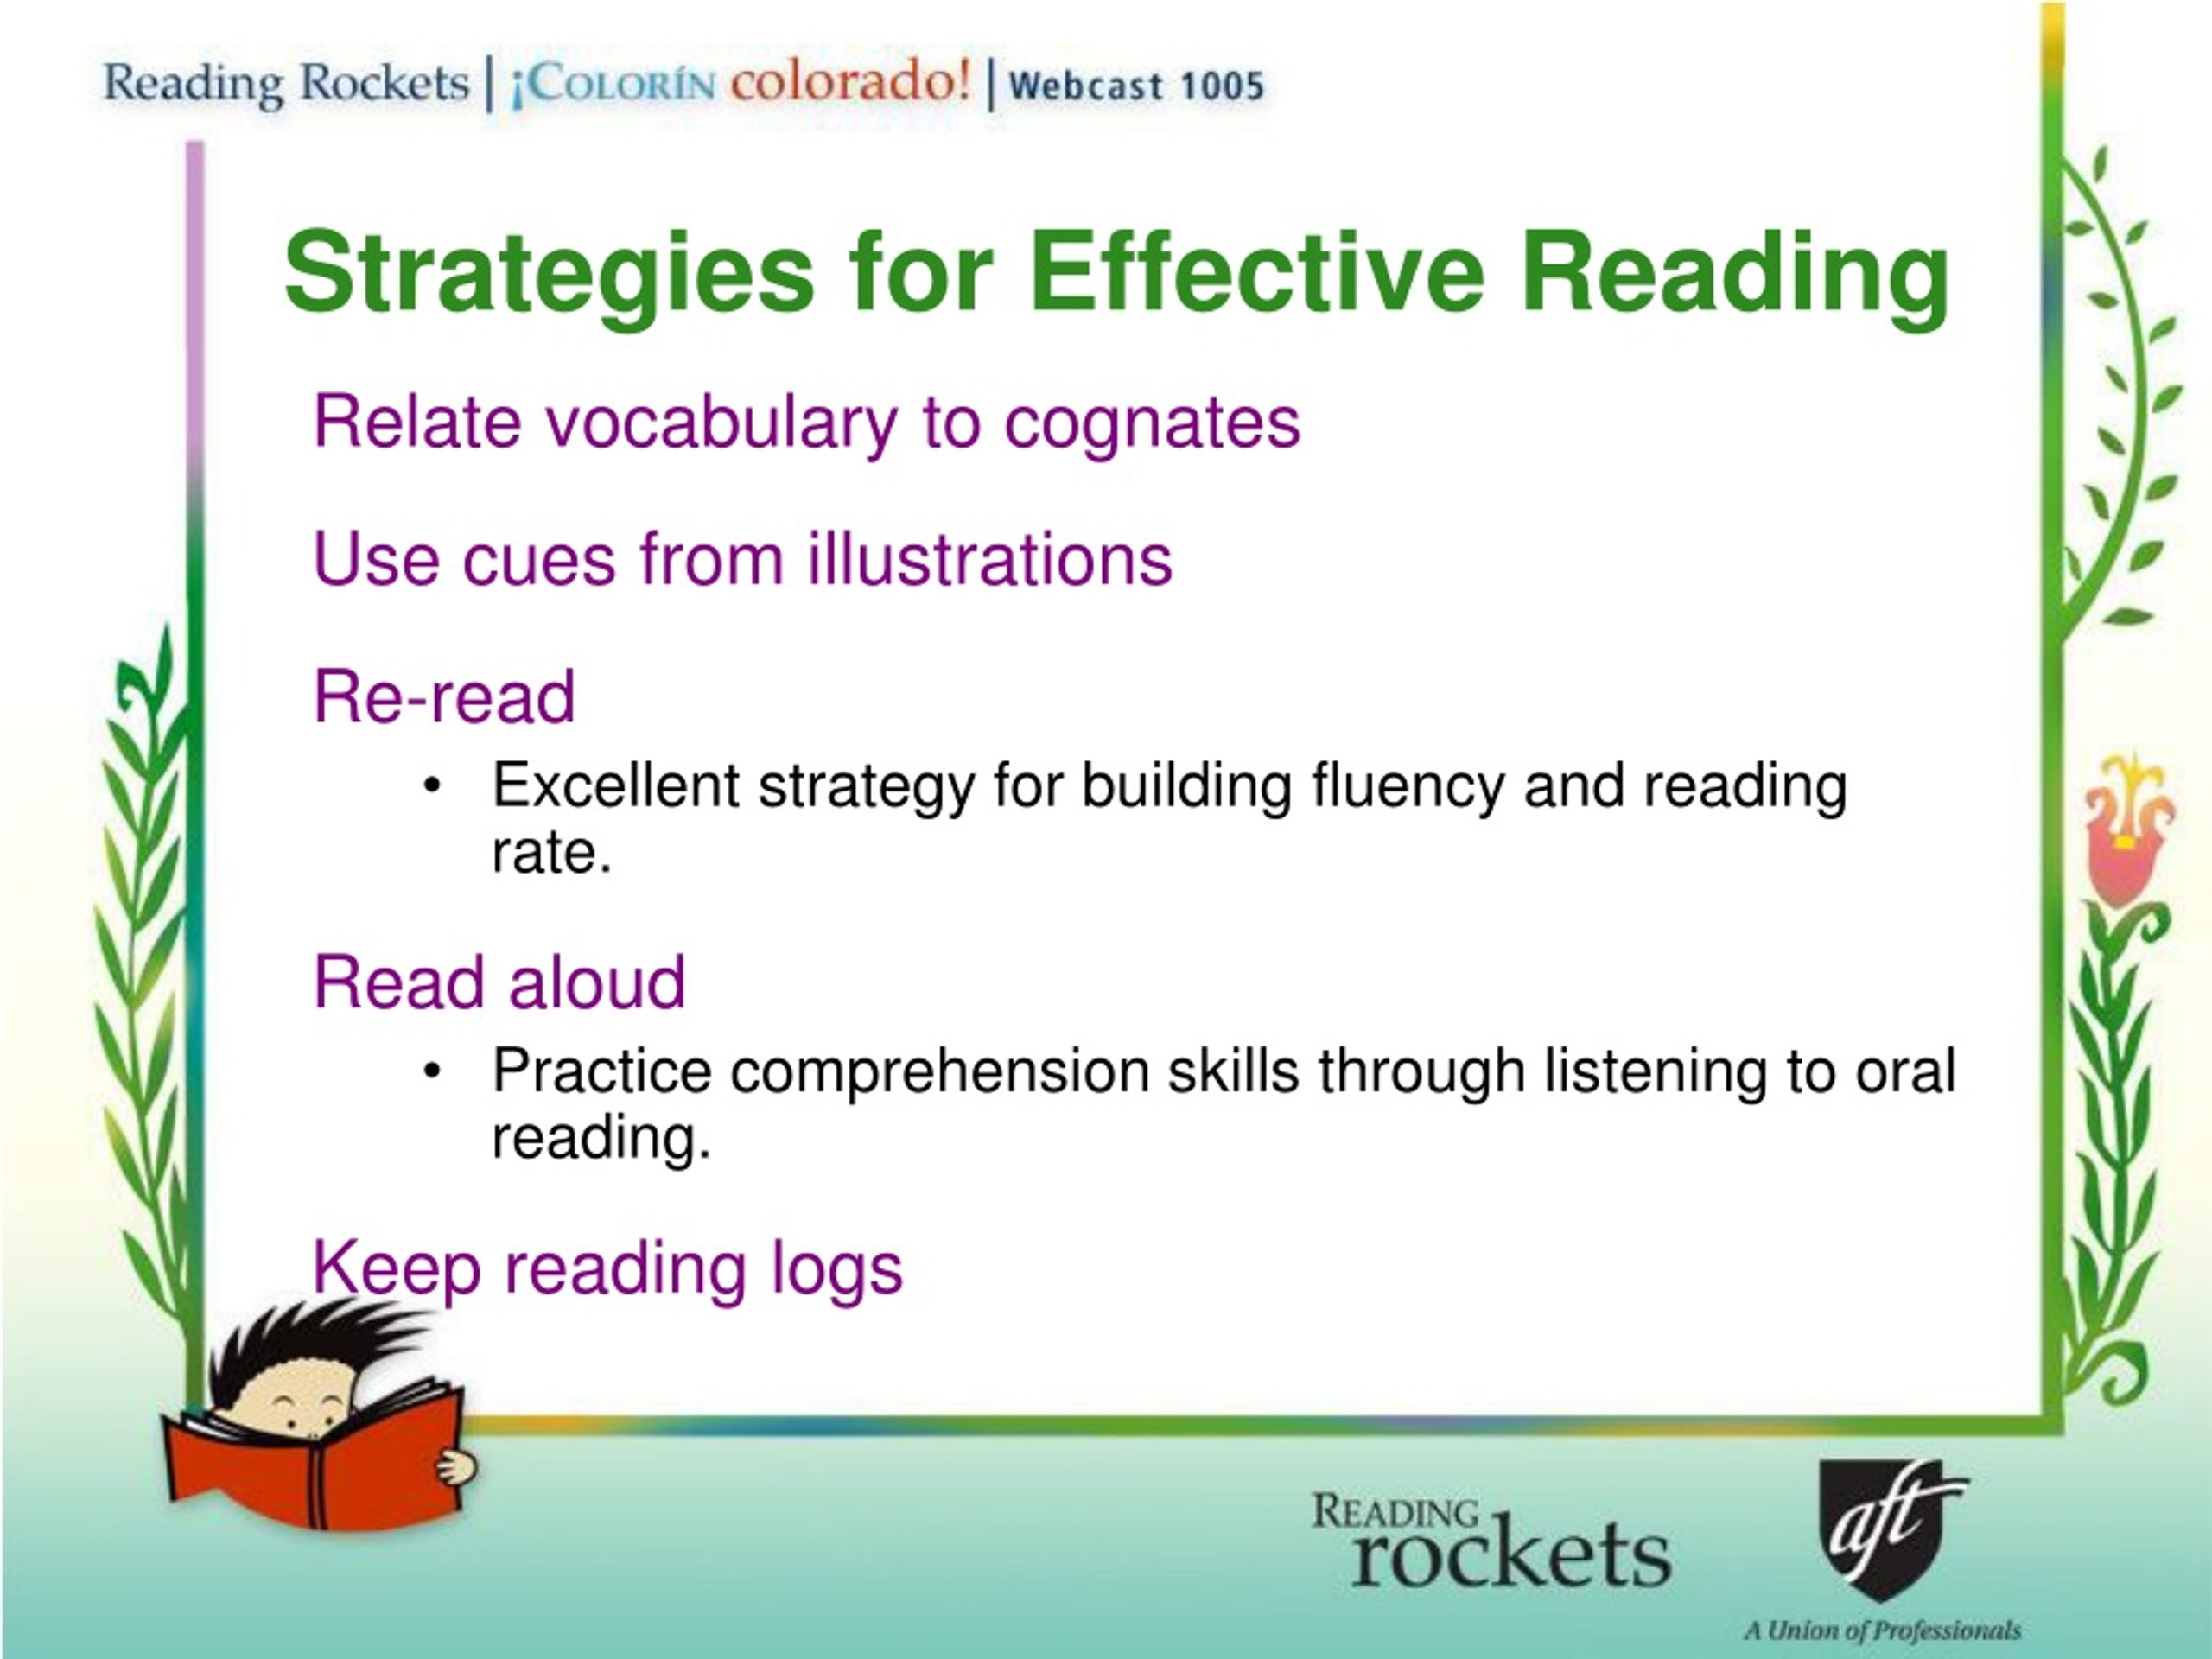 reading skills ppt presentation